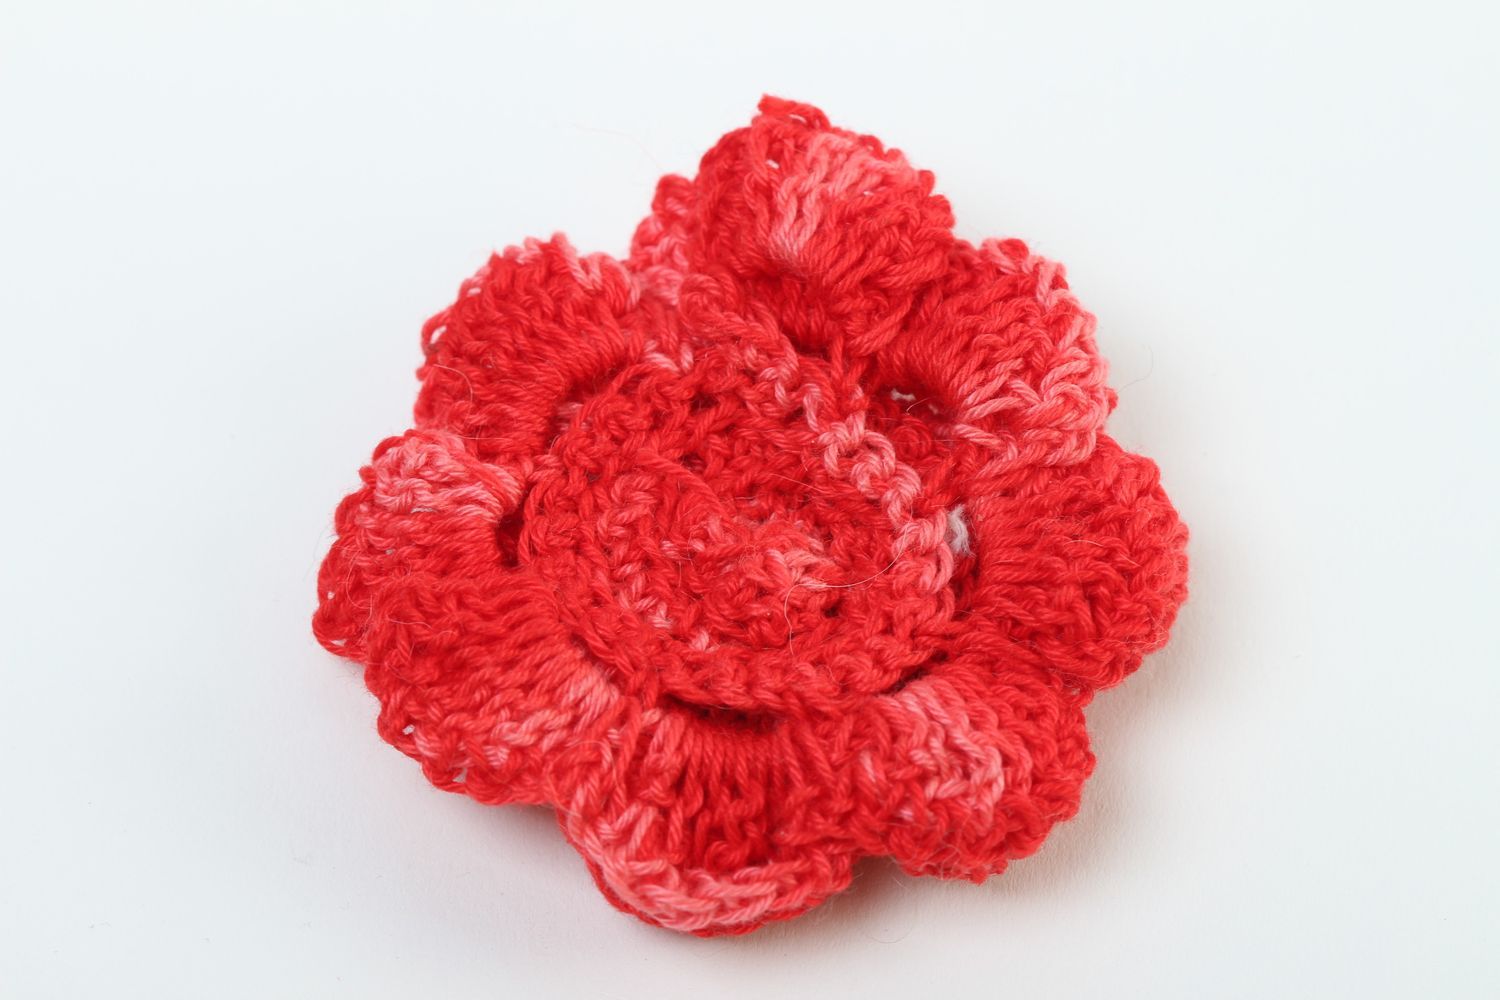 Handmade crocheted flower decorative flowers crochet ideas homemade crafts photo 4